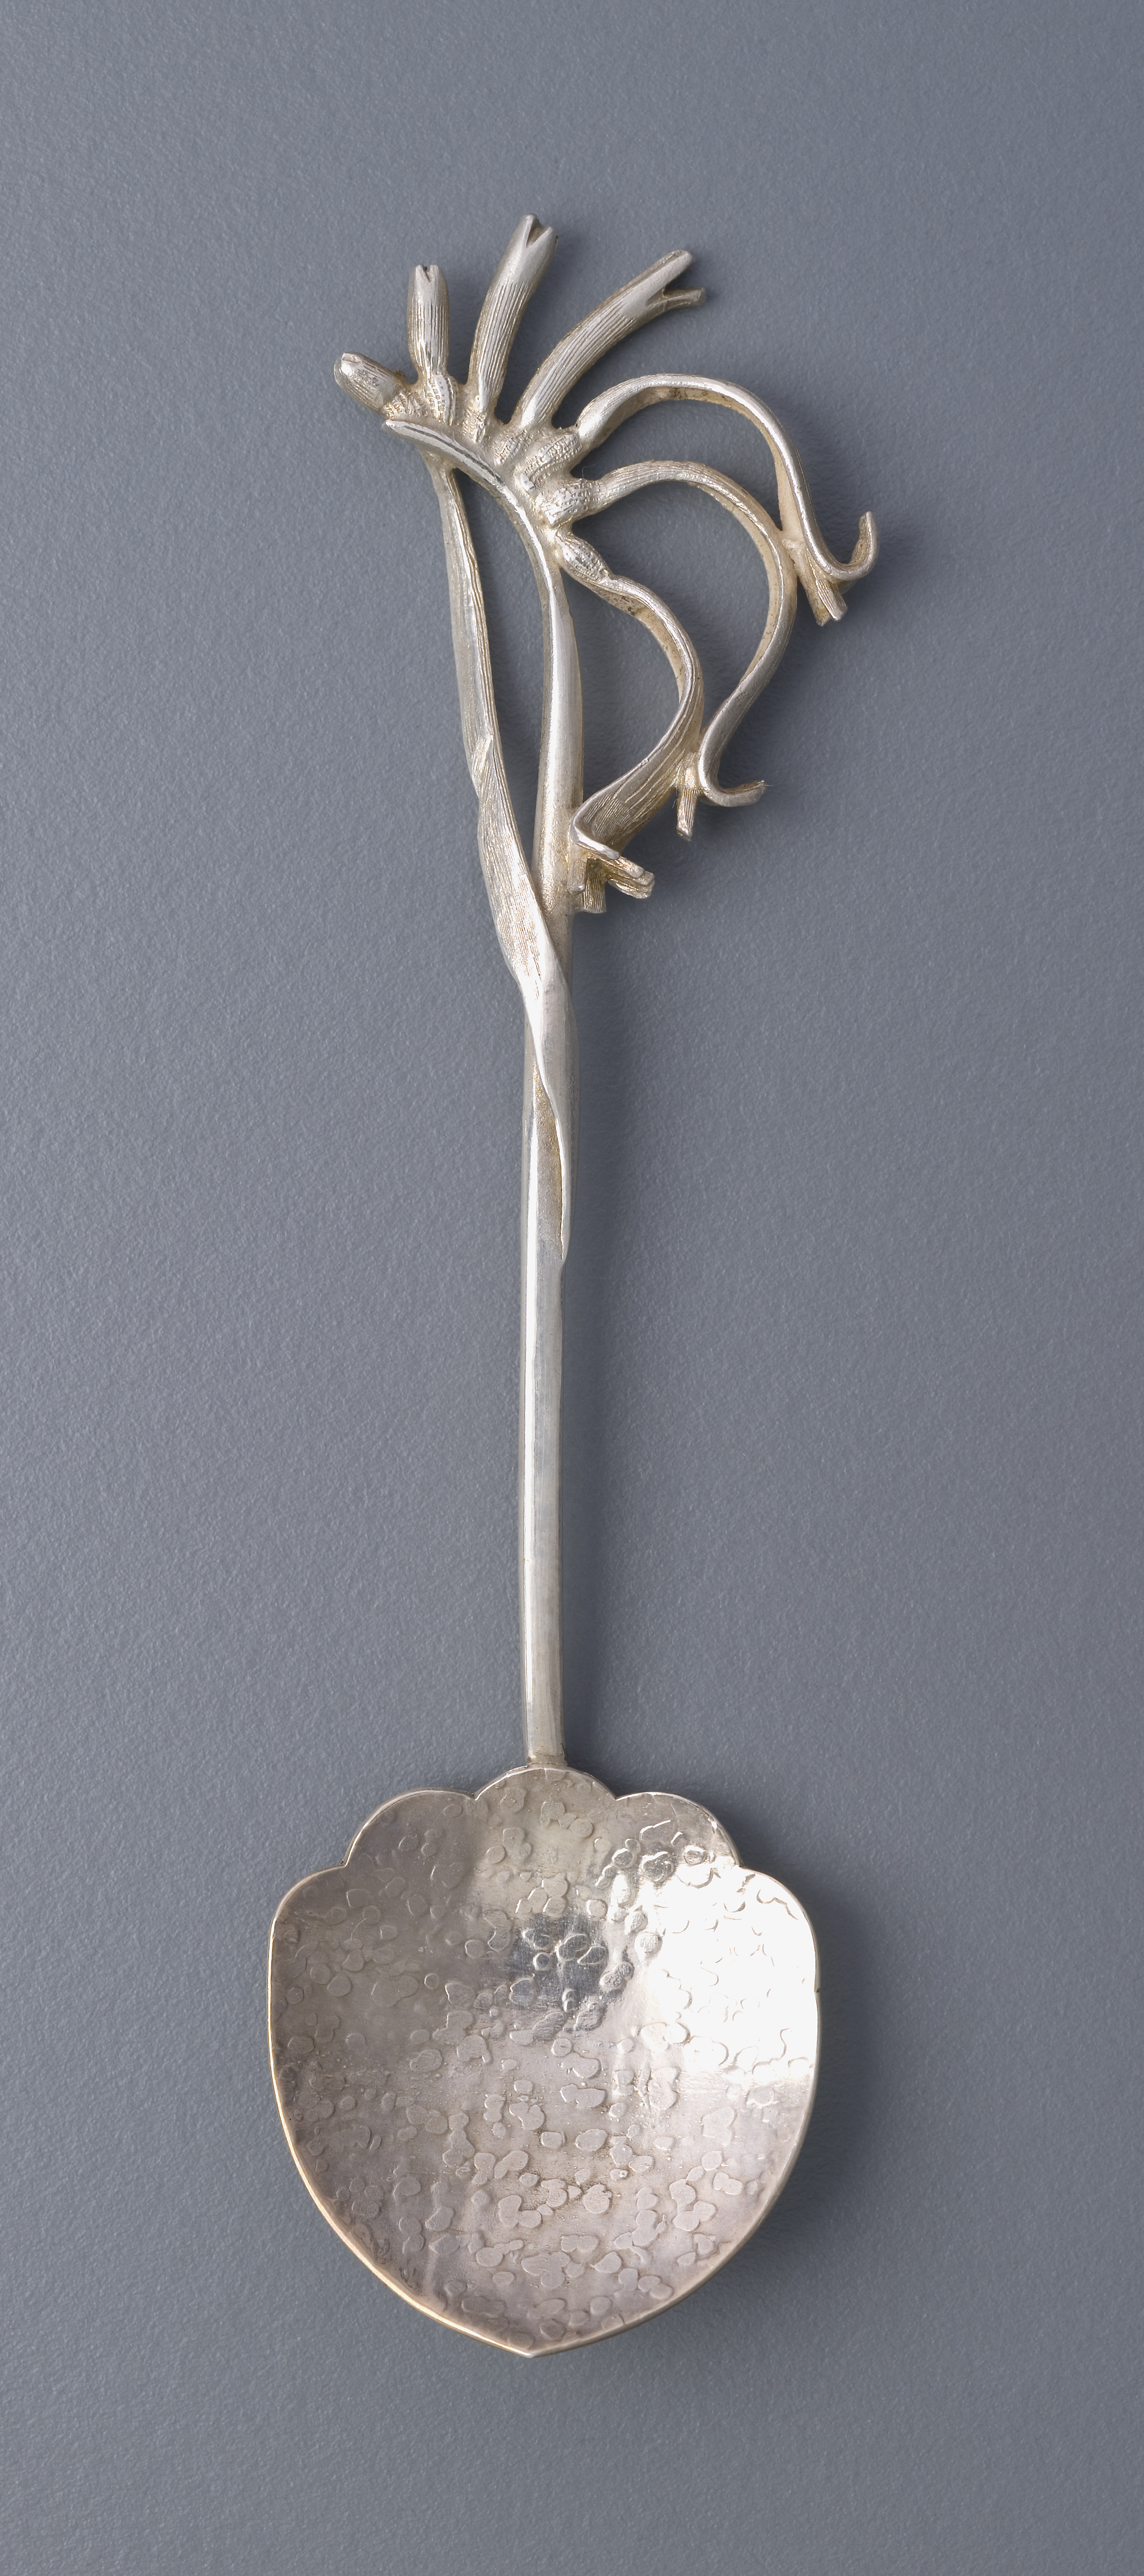 Souvenir spoon with kangaroo paw finial